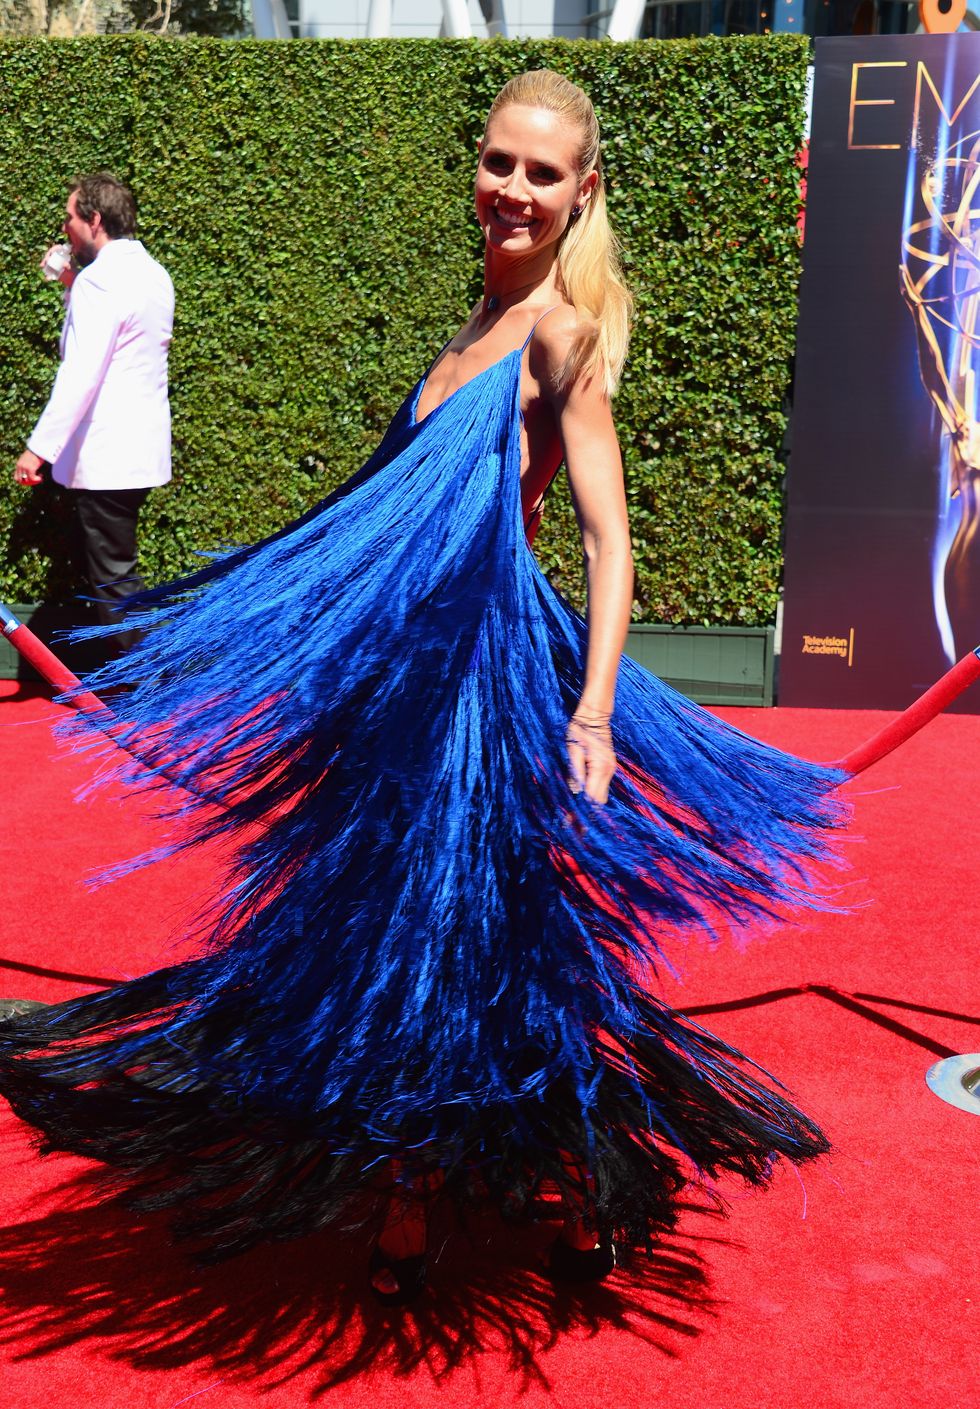 Heidi Klum wearing a blue tasseled dress at the Emmys - celebrity style photos - fashion - cosmopolitan.co.uk